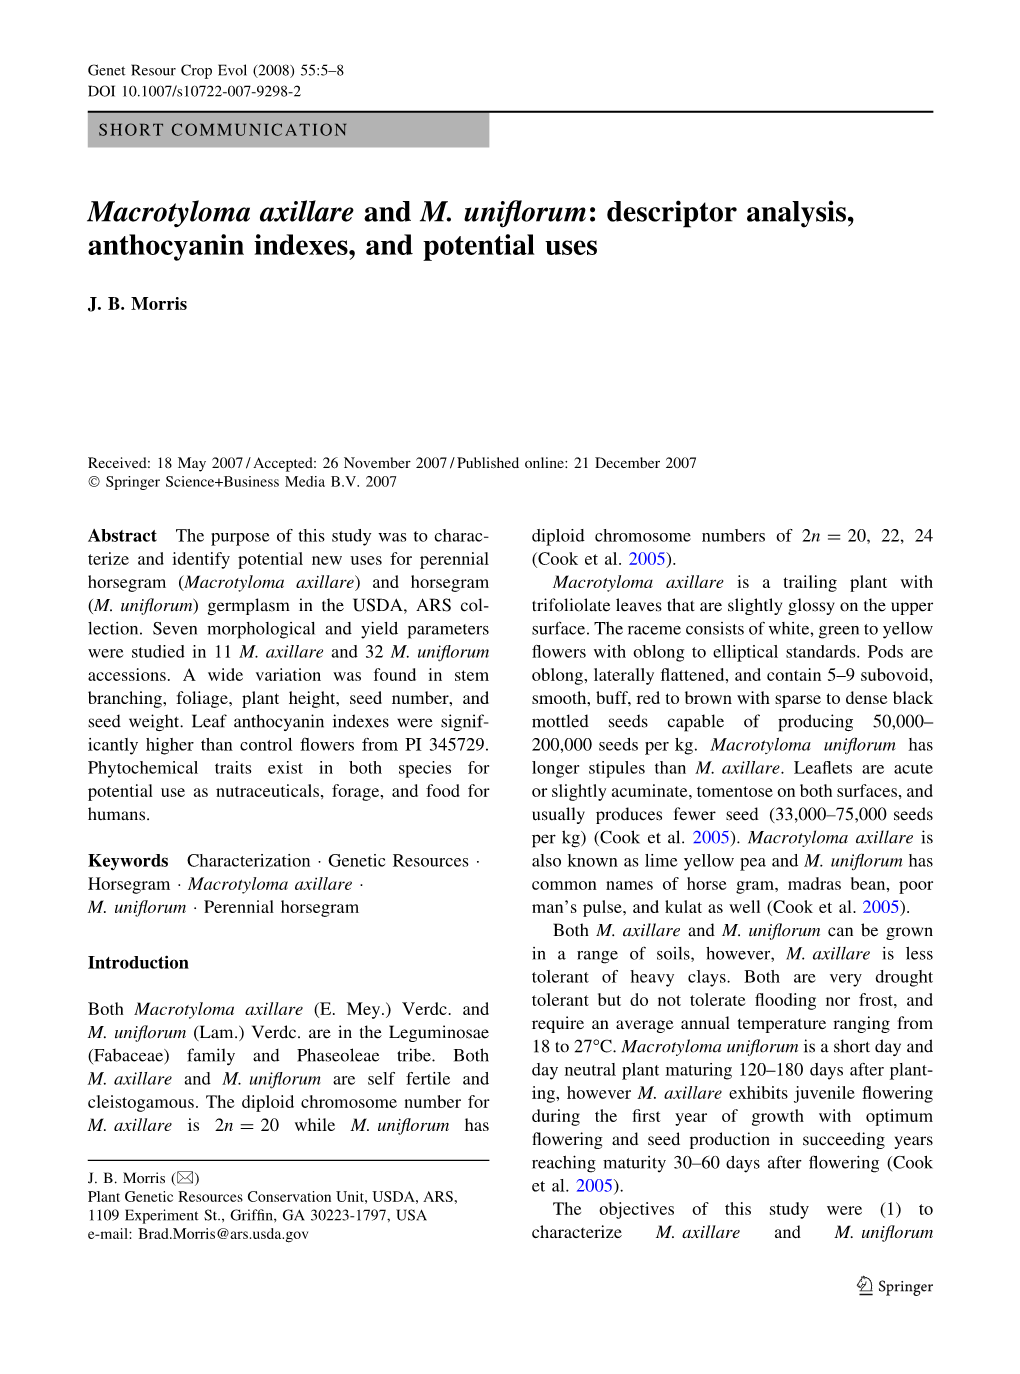 Macrotyloma Axillare and M. Uniflorum